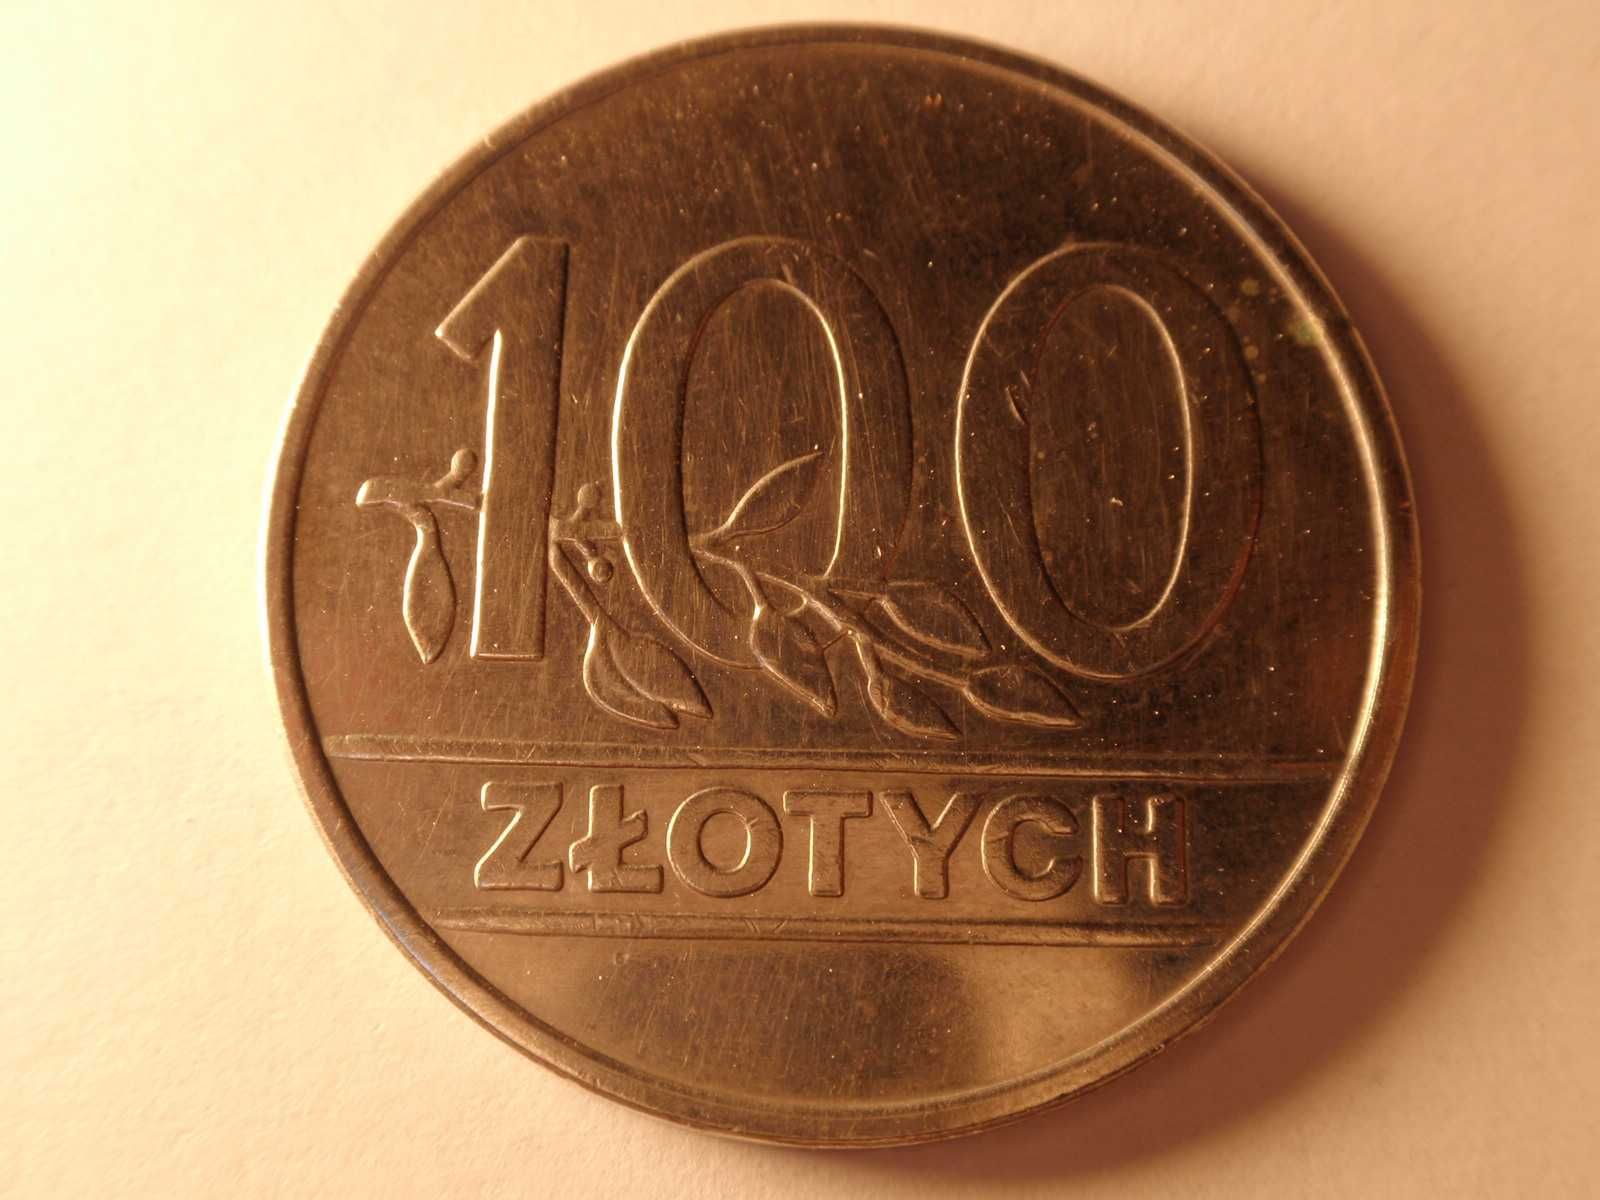 Moneta 100 zł z 1990 roku